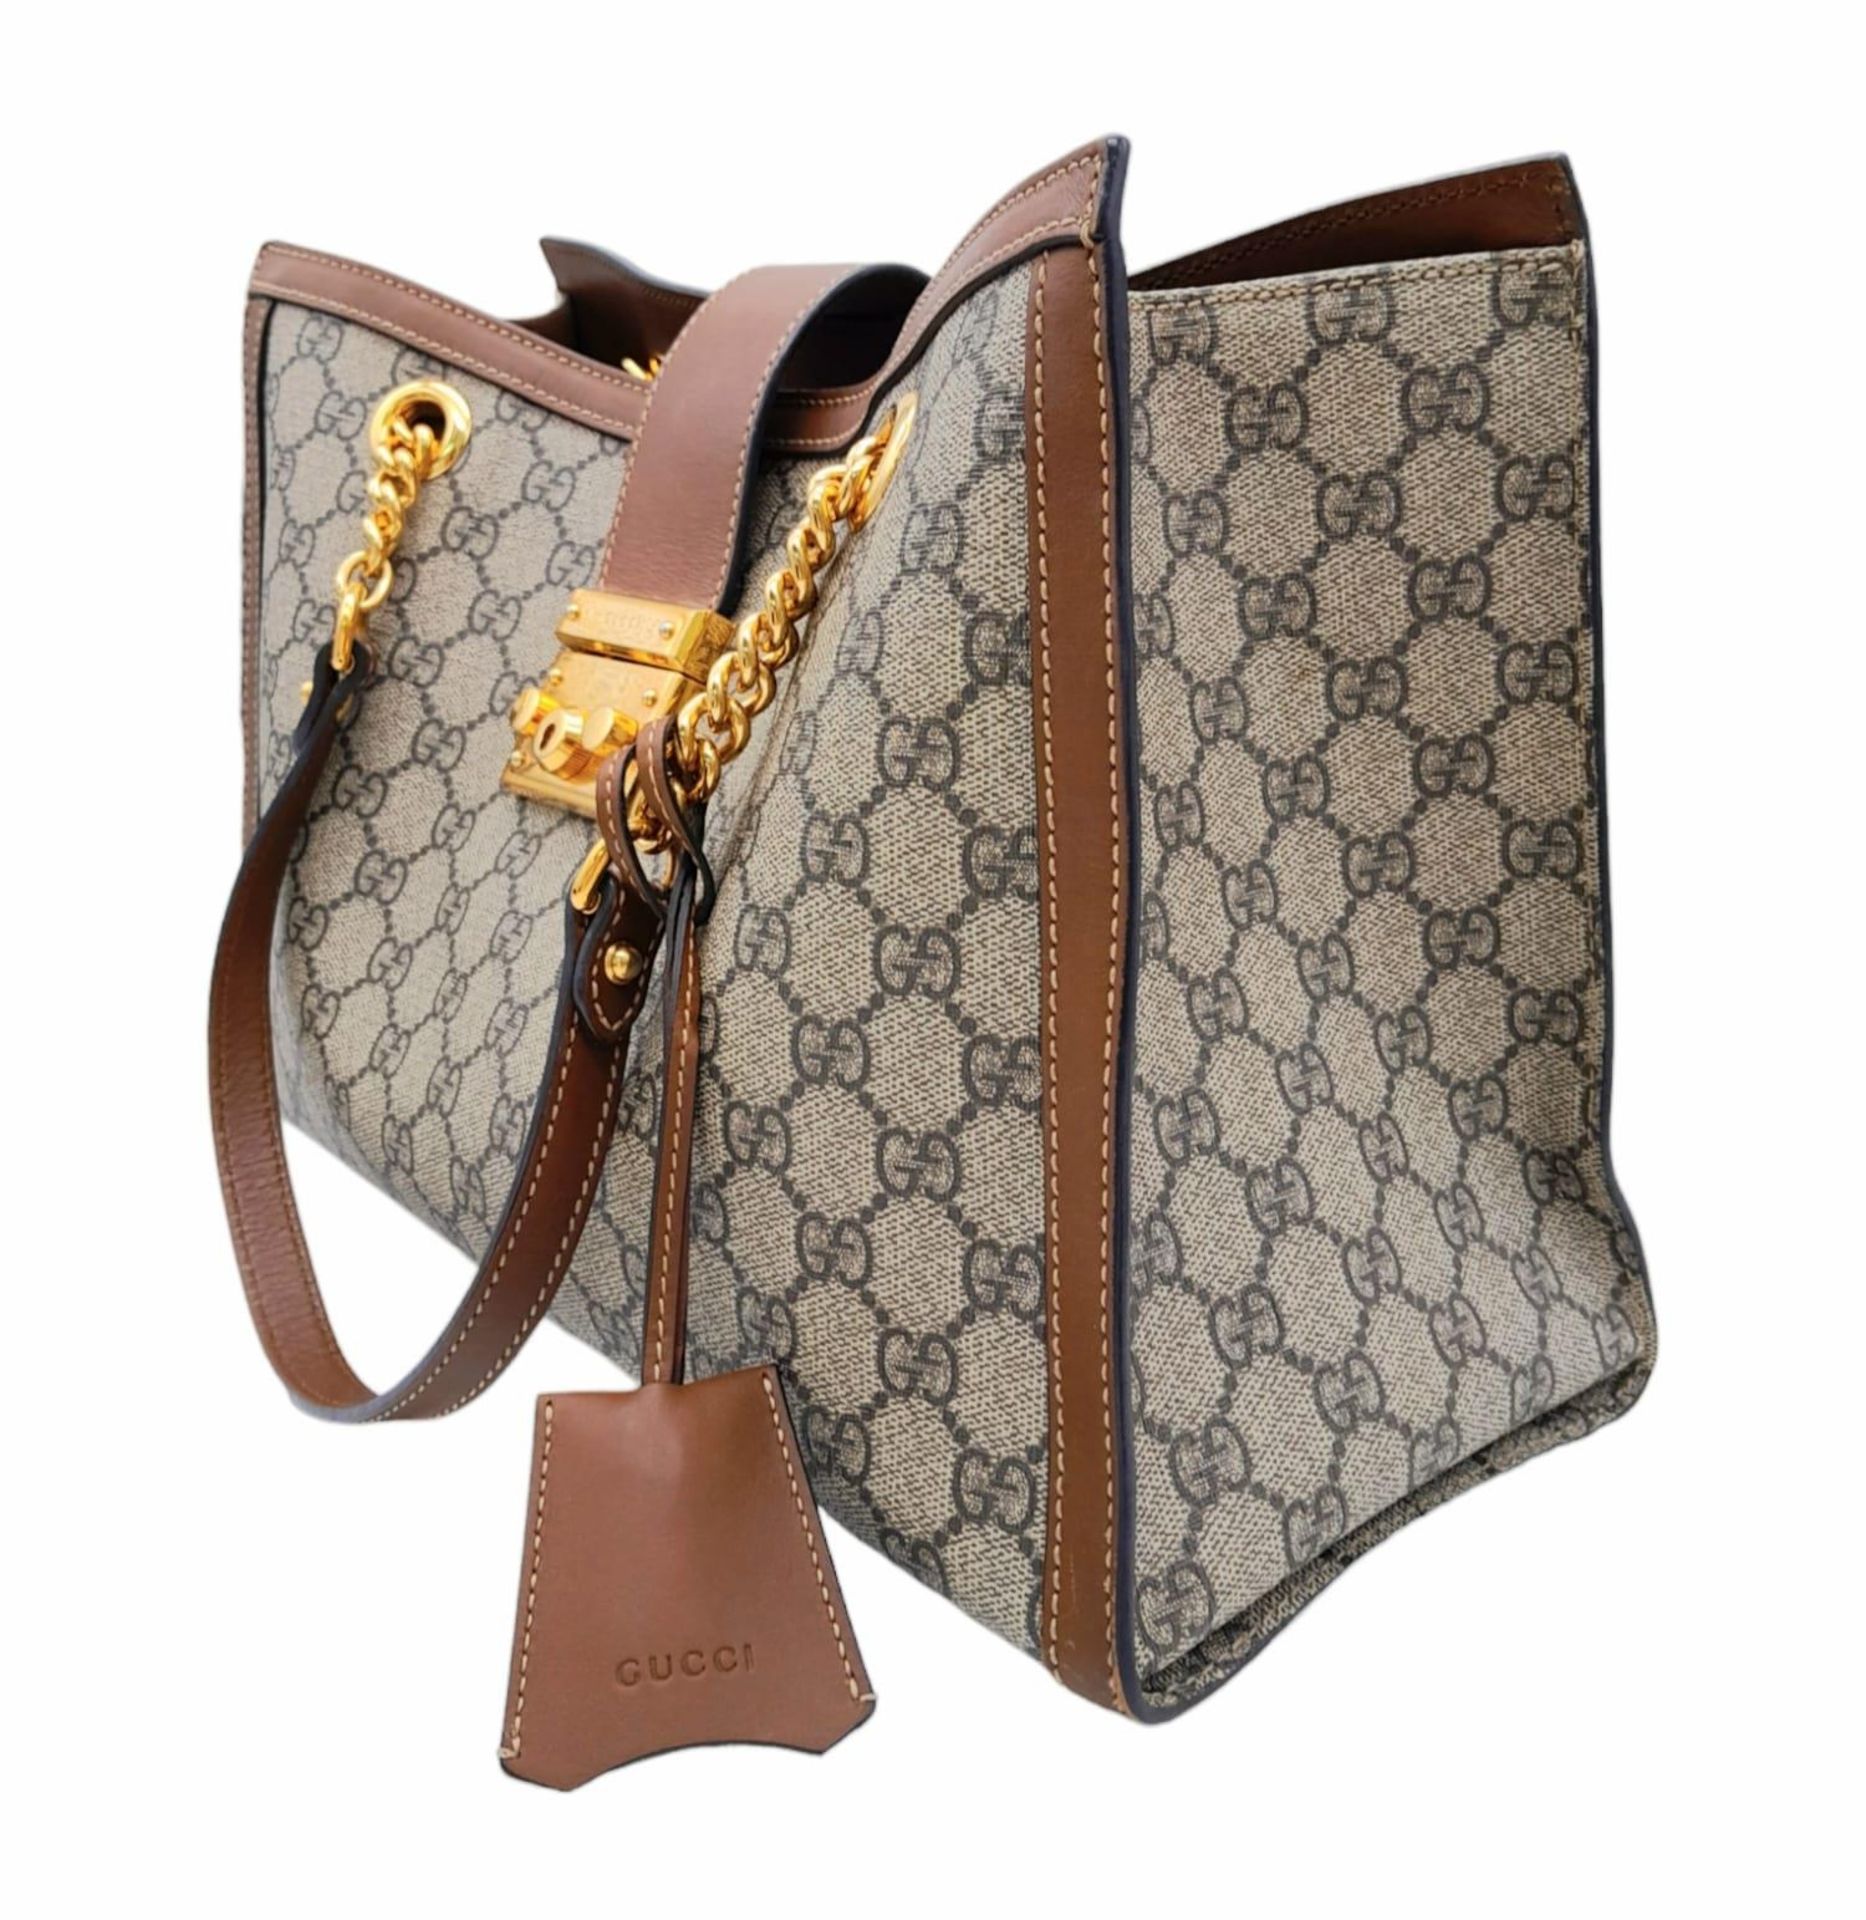 A Gucci GG padlock medium shoulder bag, gold tone hardware, brown suede leather interior. Size - Image 2 of 11